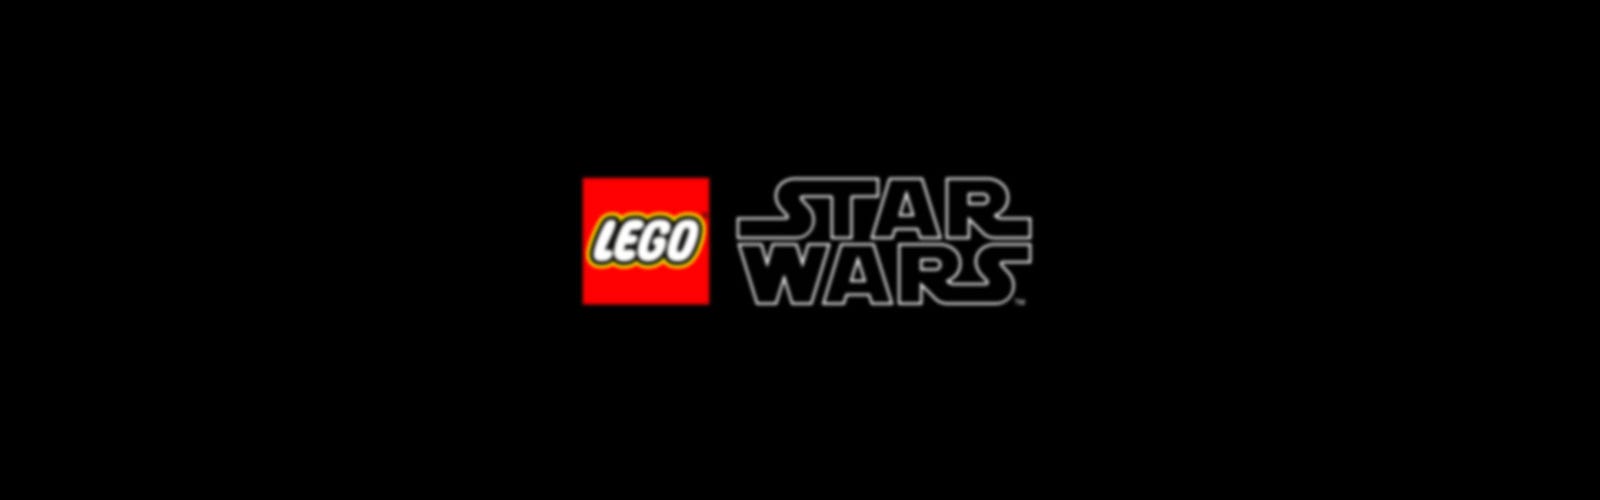 Buy LEGO® Captain Rex Helmet - Casco del Capitán Rex online for62,99€